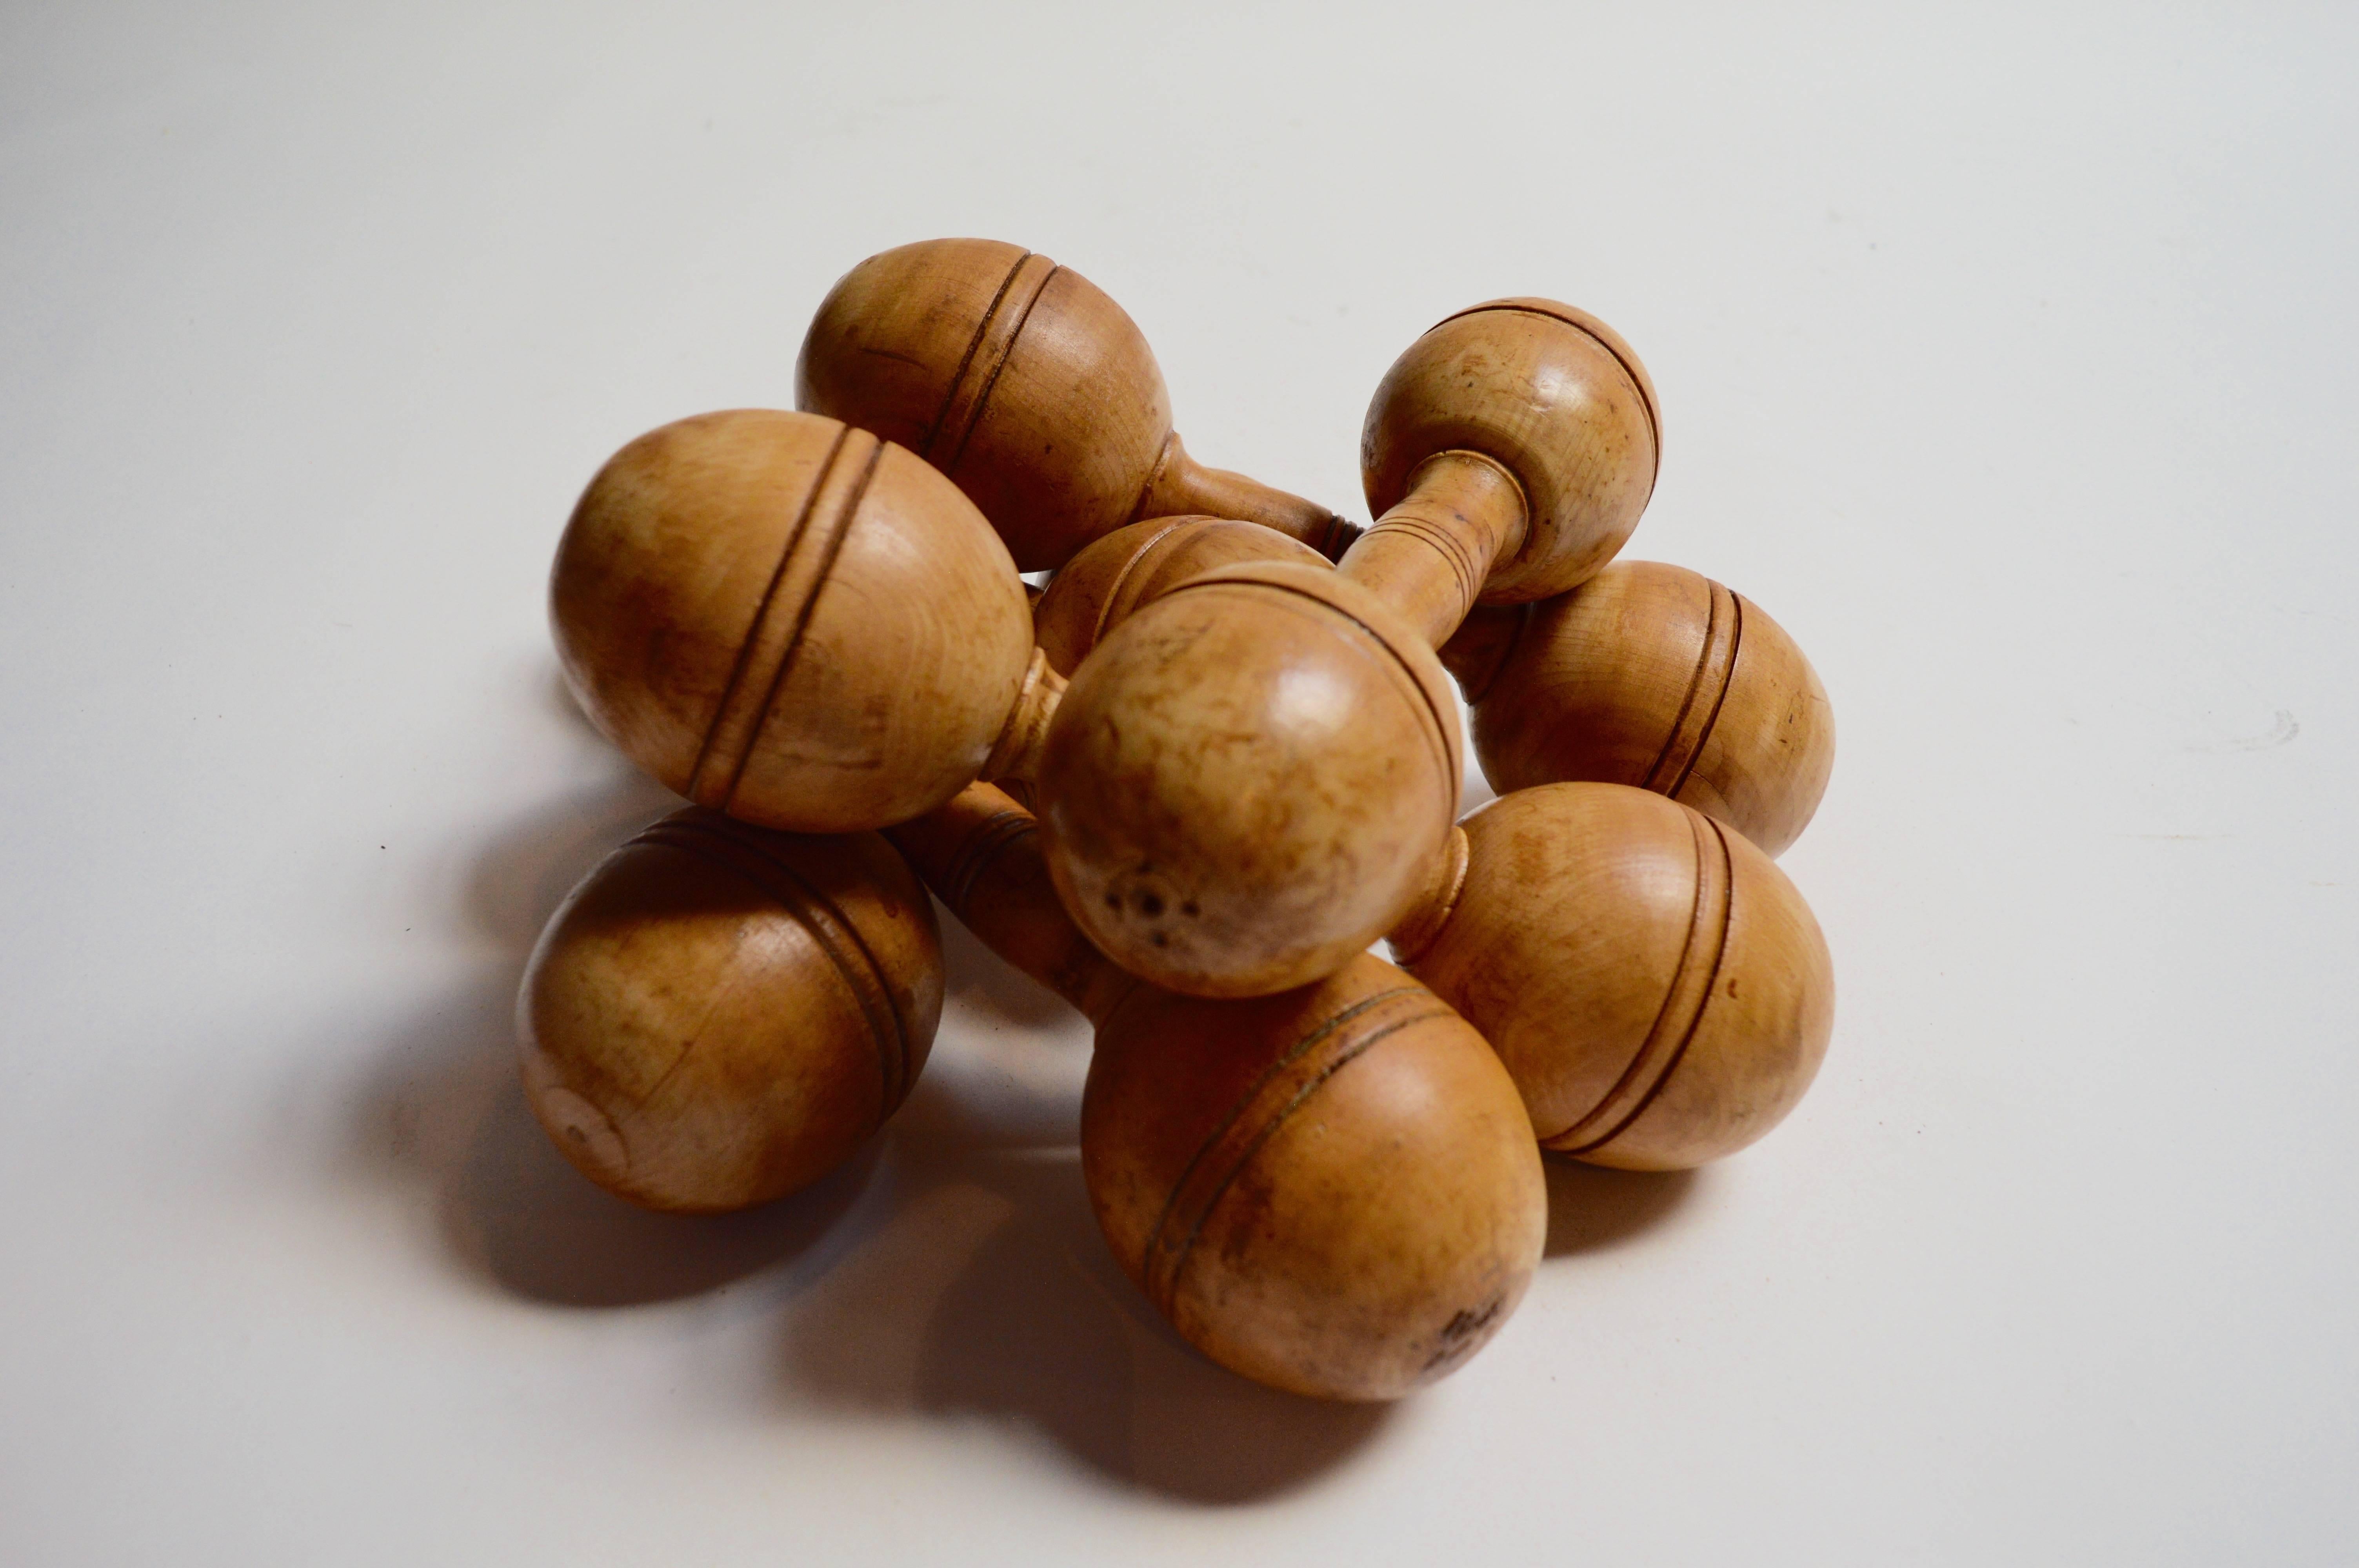 antique wooden dumbbells